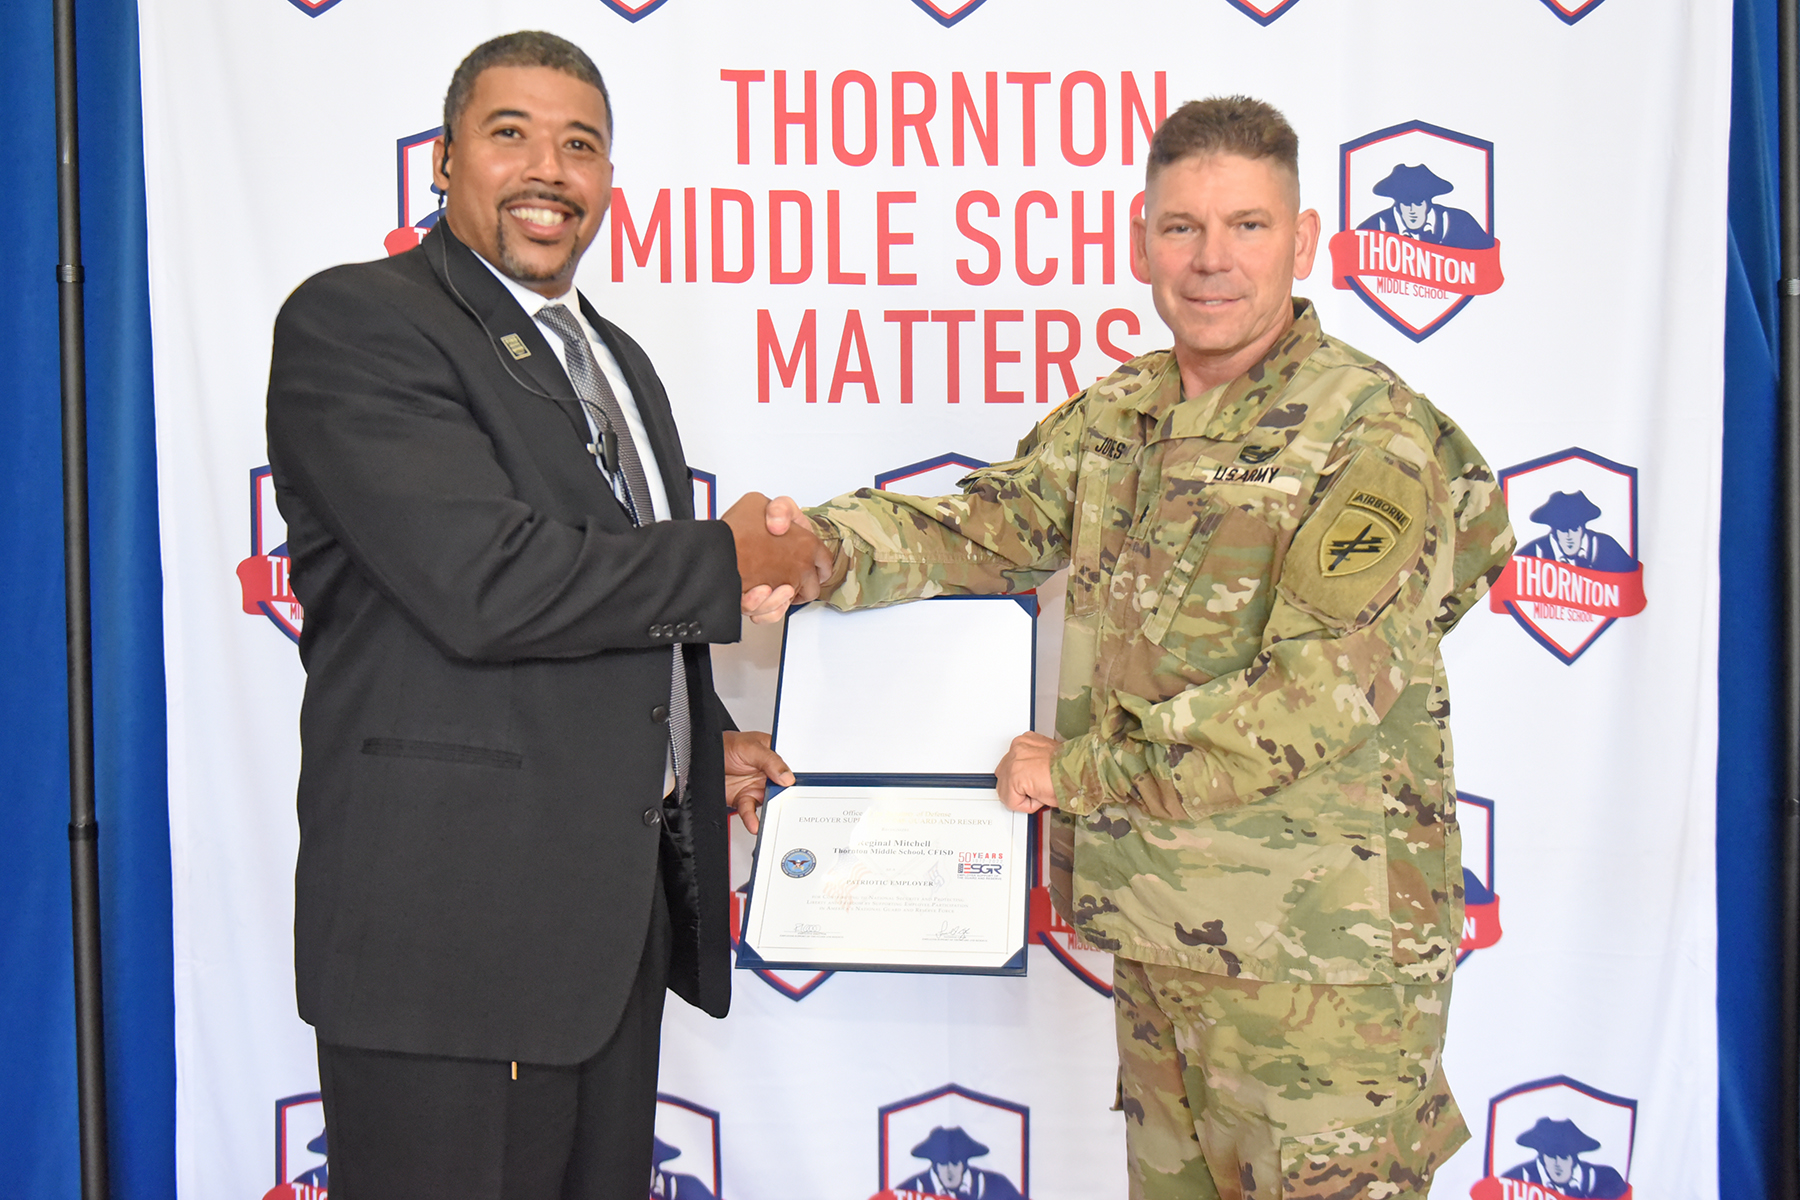 Thornton MS Principal Named a Recipient of ESGR Patriot Award